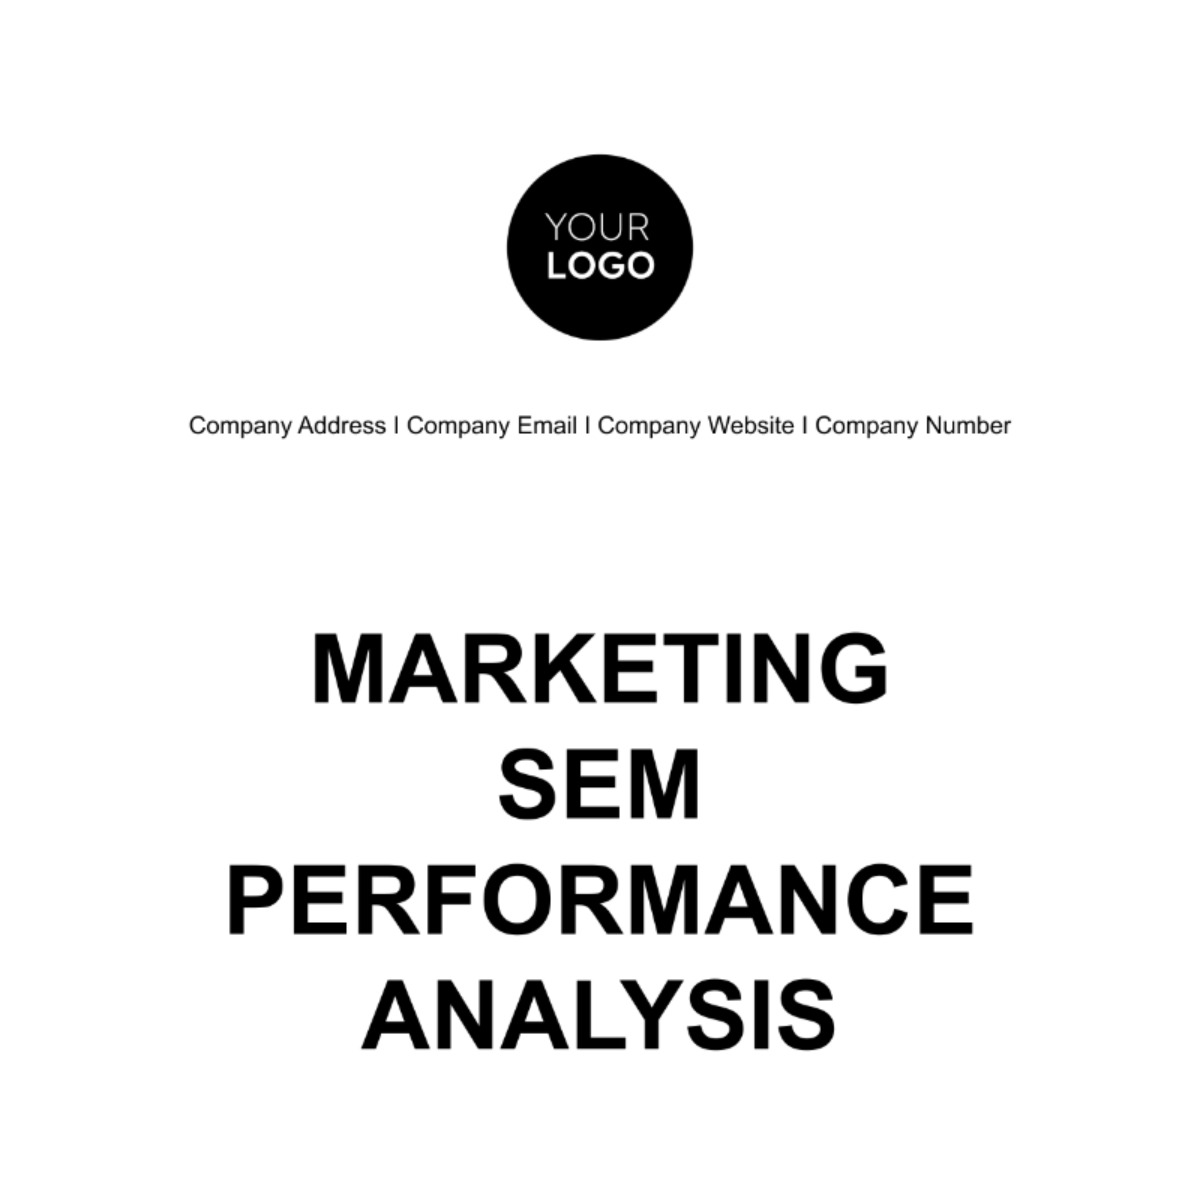 Free Marketing SEM Performance Analysis Template